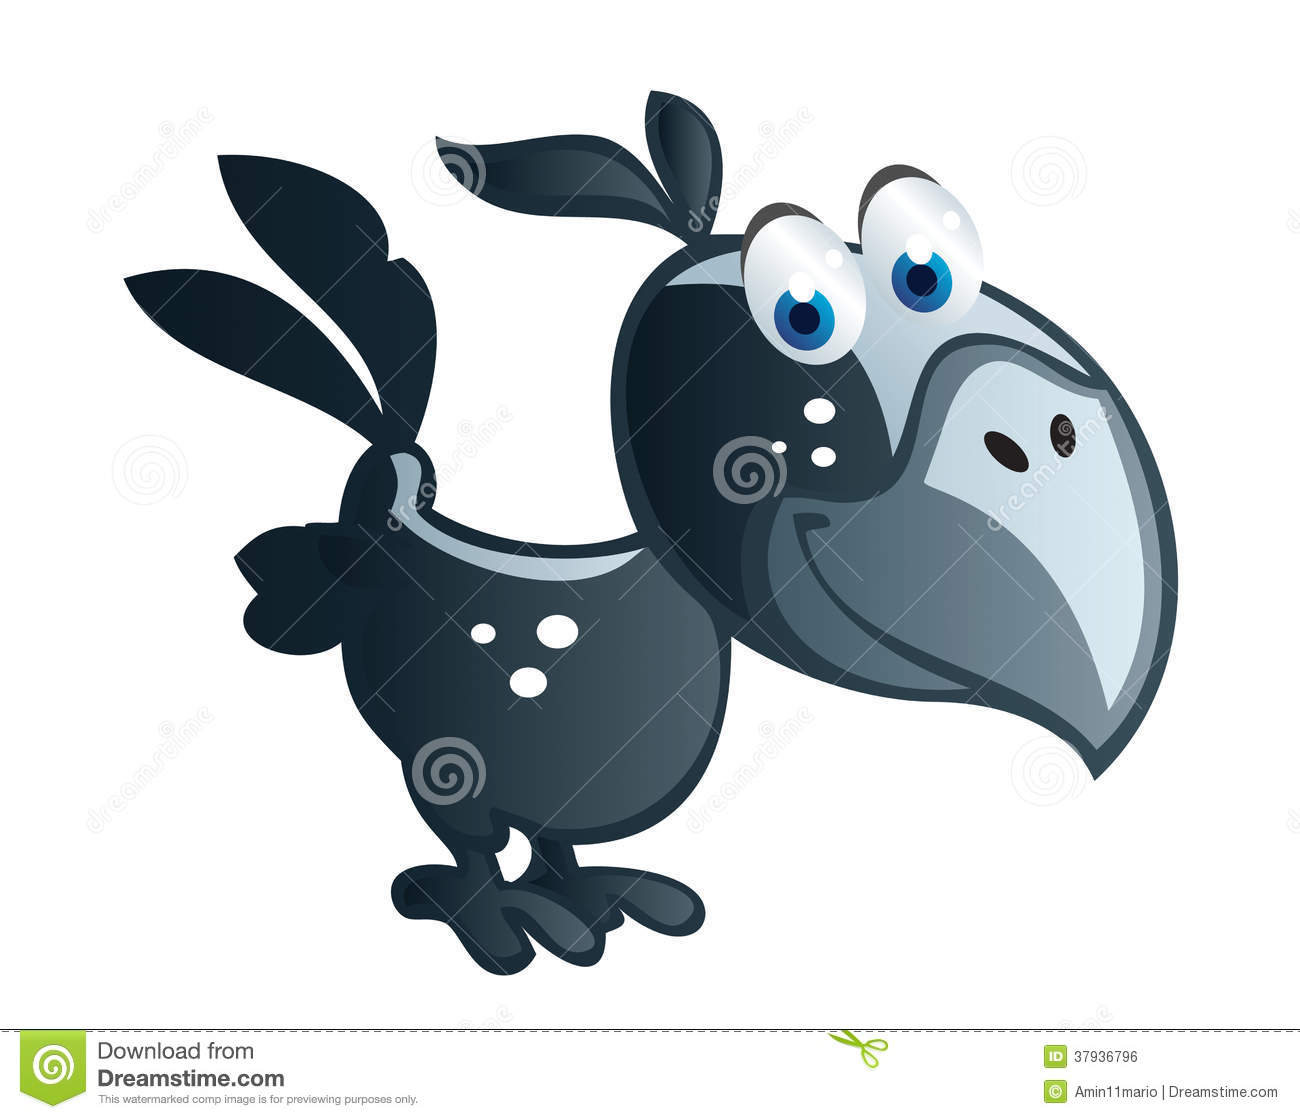 Baby Crow Cartoon Royalty Free Stock Image   Image  37936796